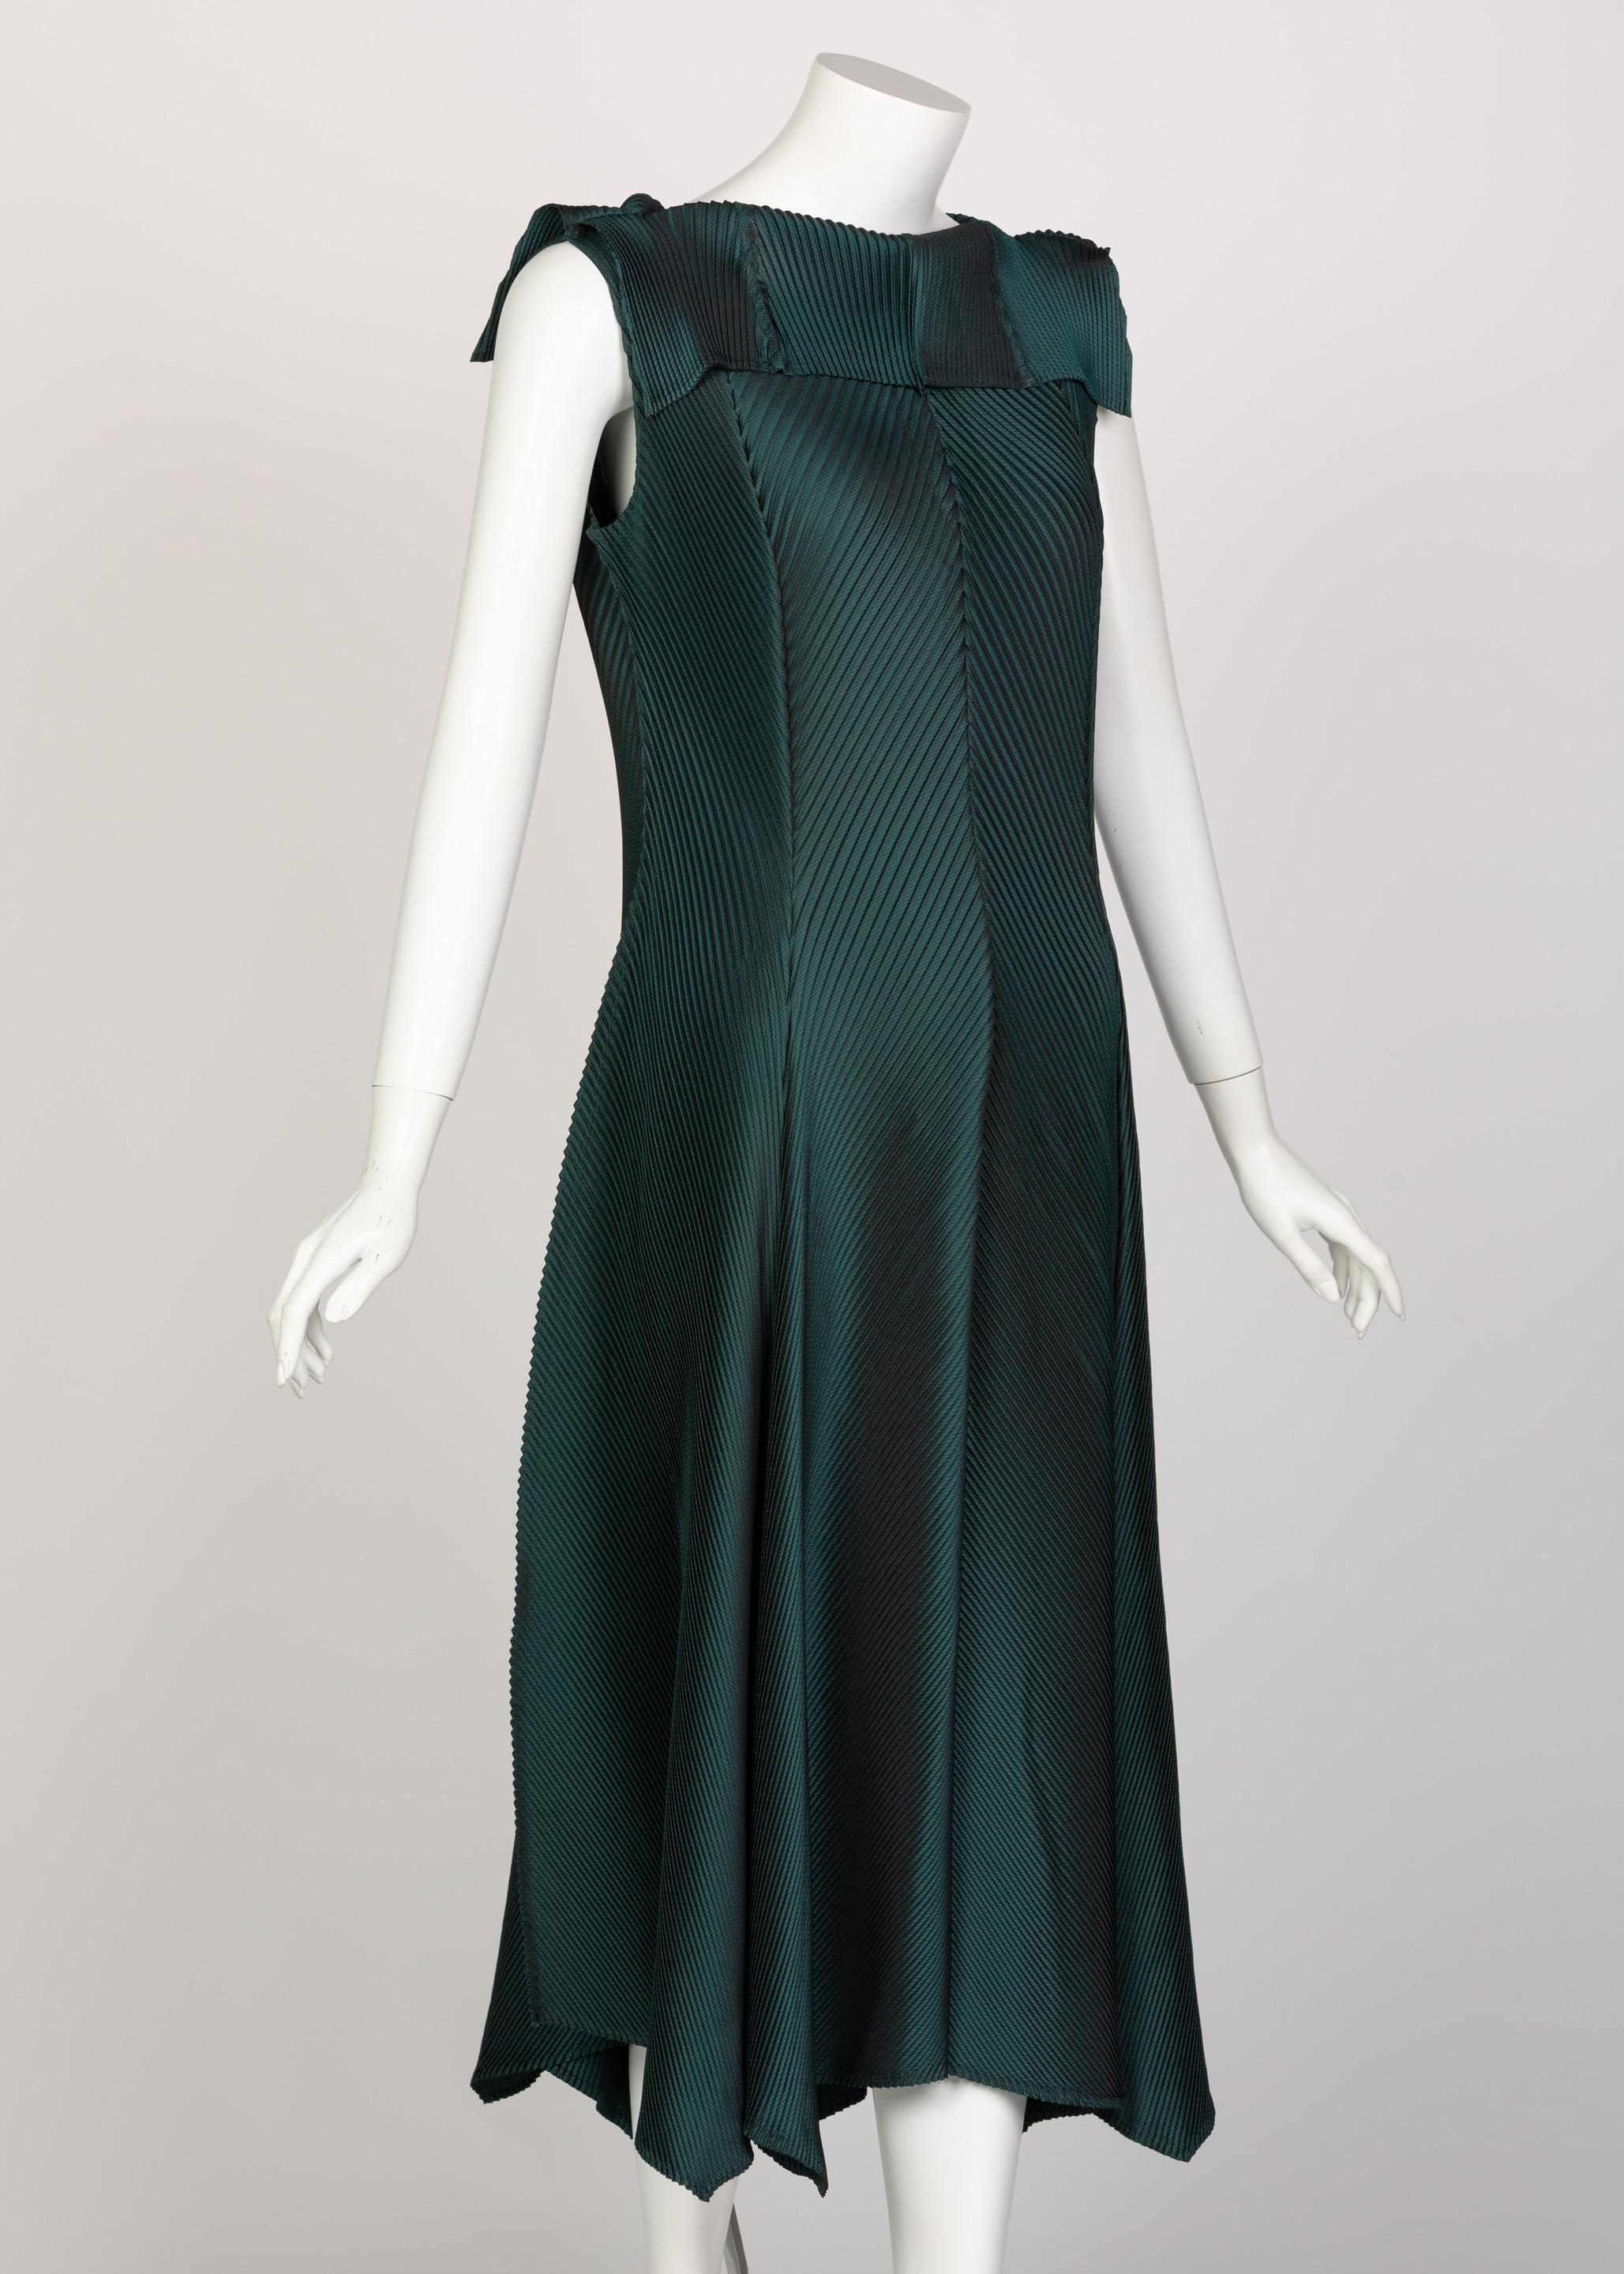 green pleated dress